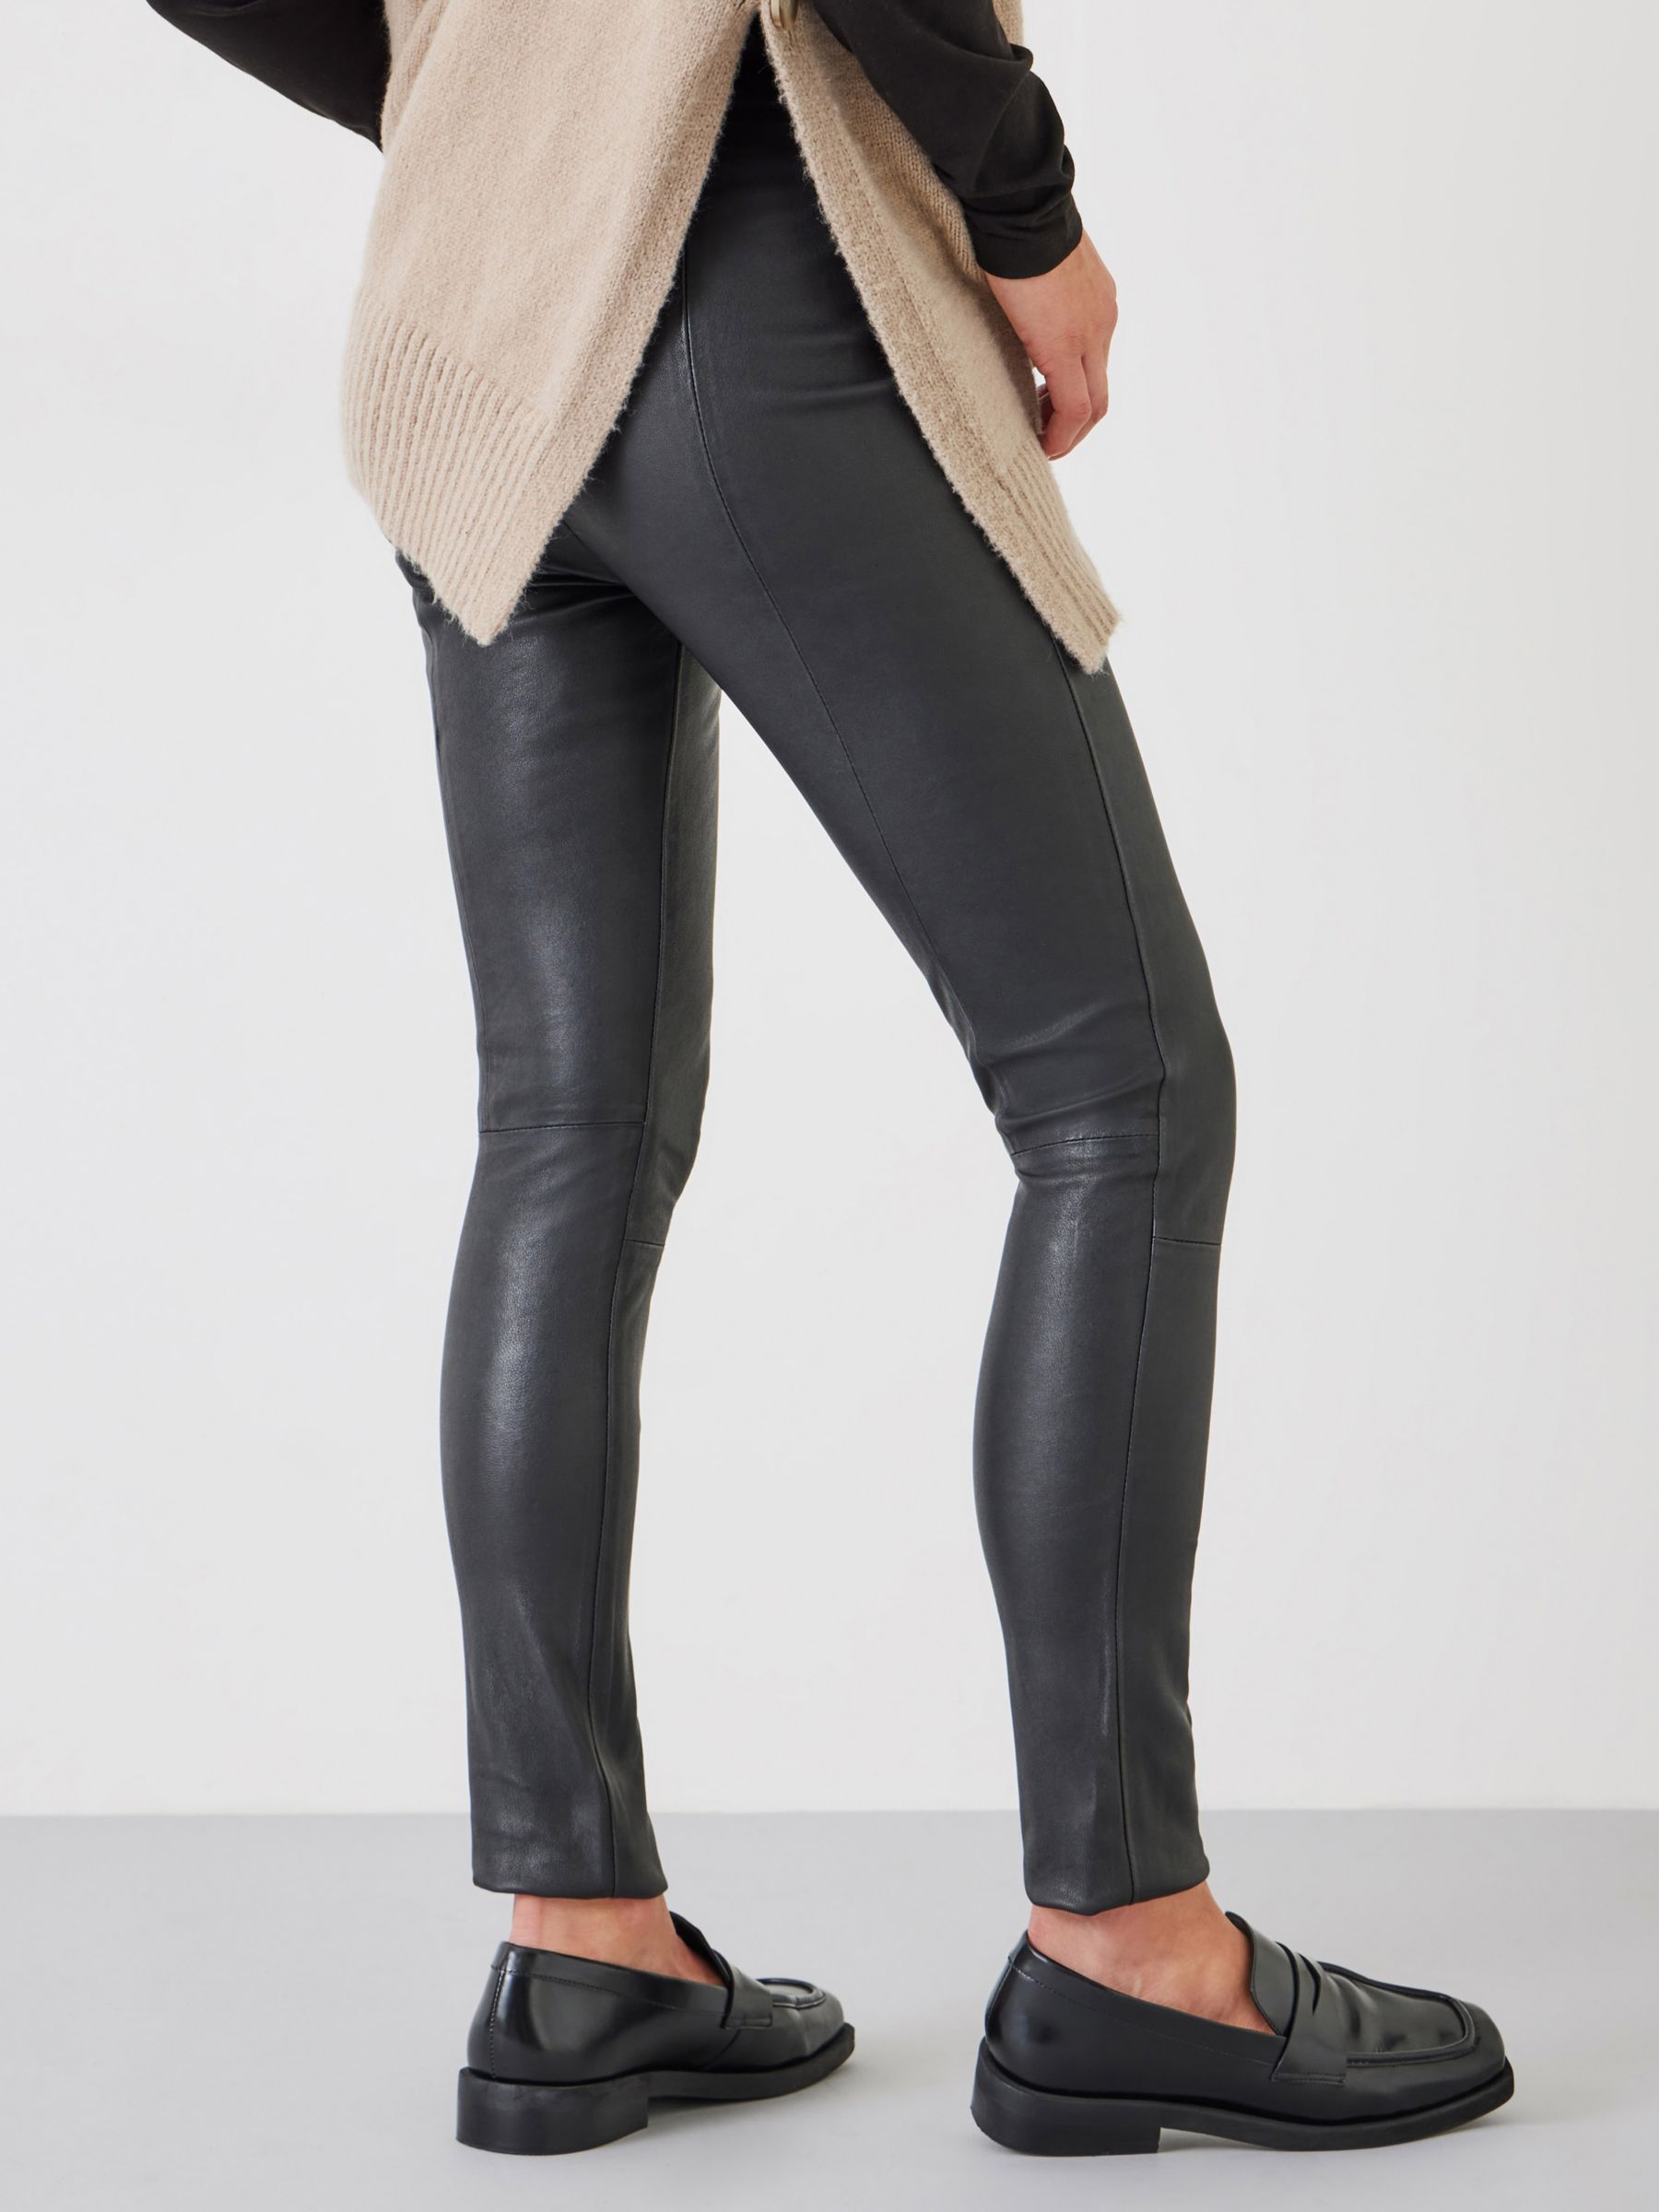 Charcoal grey leather leggings